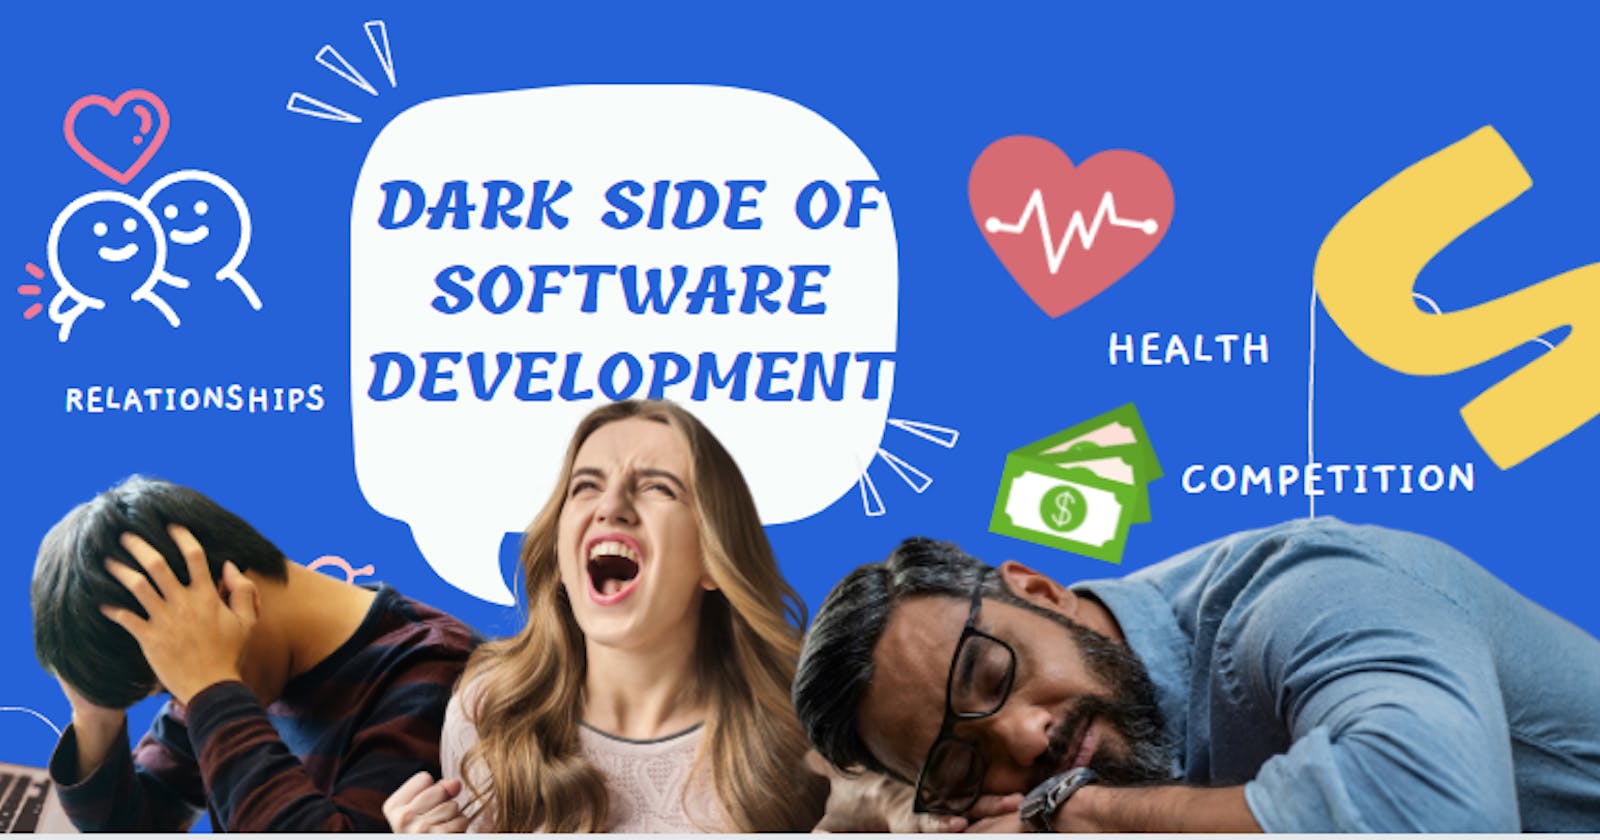 The Dark Side of Software Development